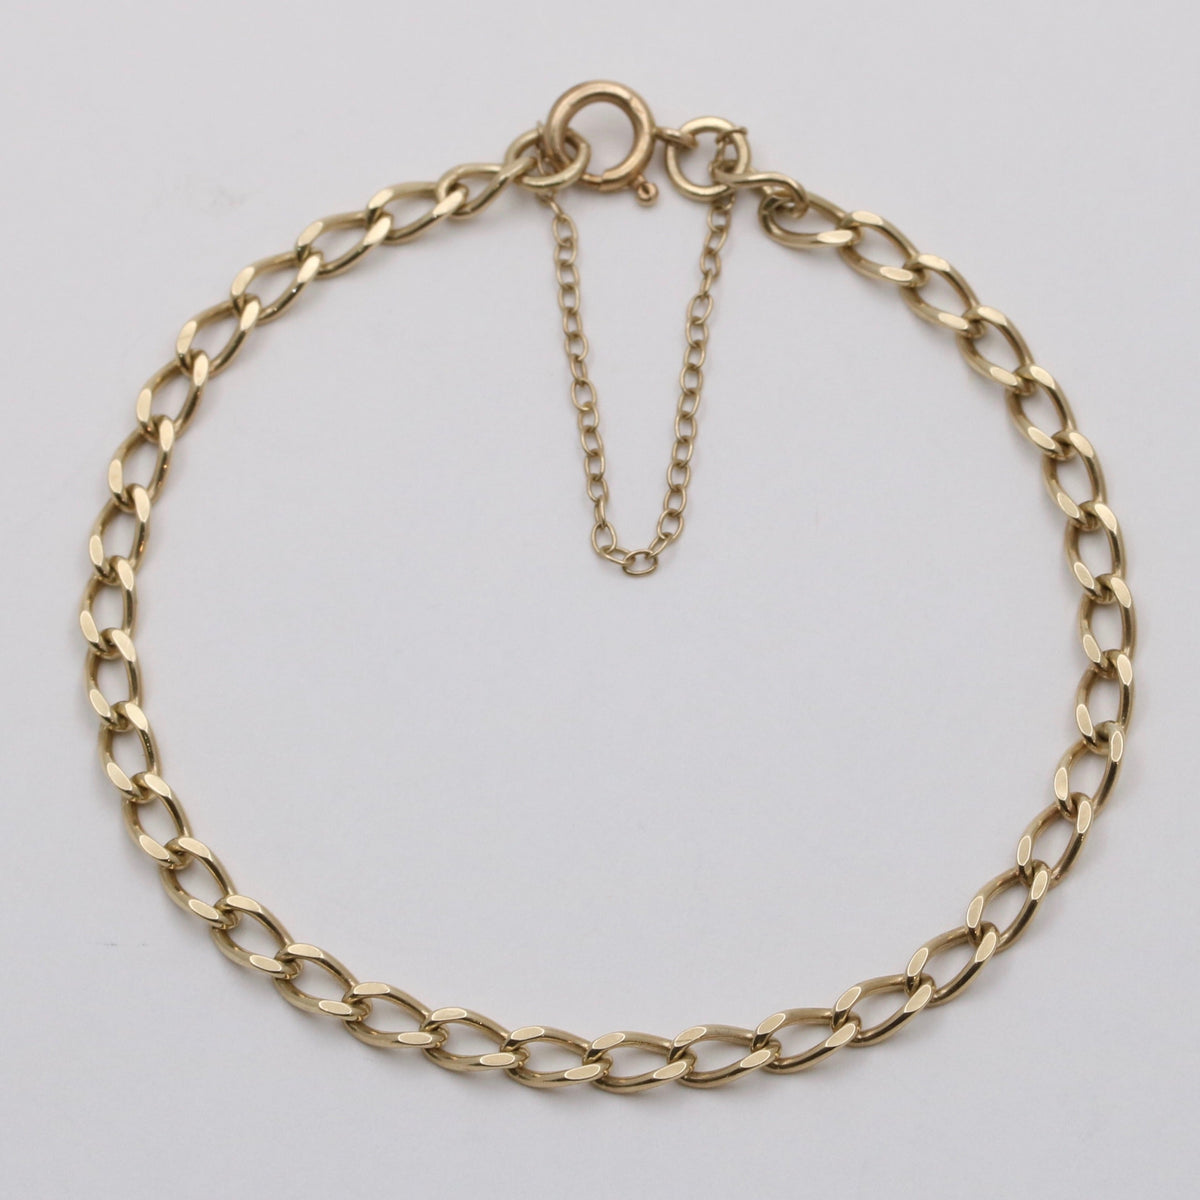 Vintage English 9K Curvy Open Link Bracelet, 7” Long